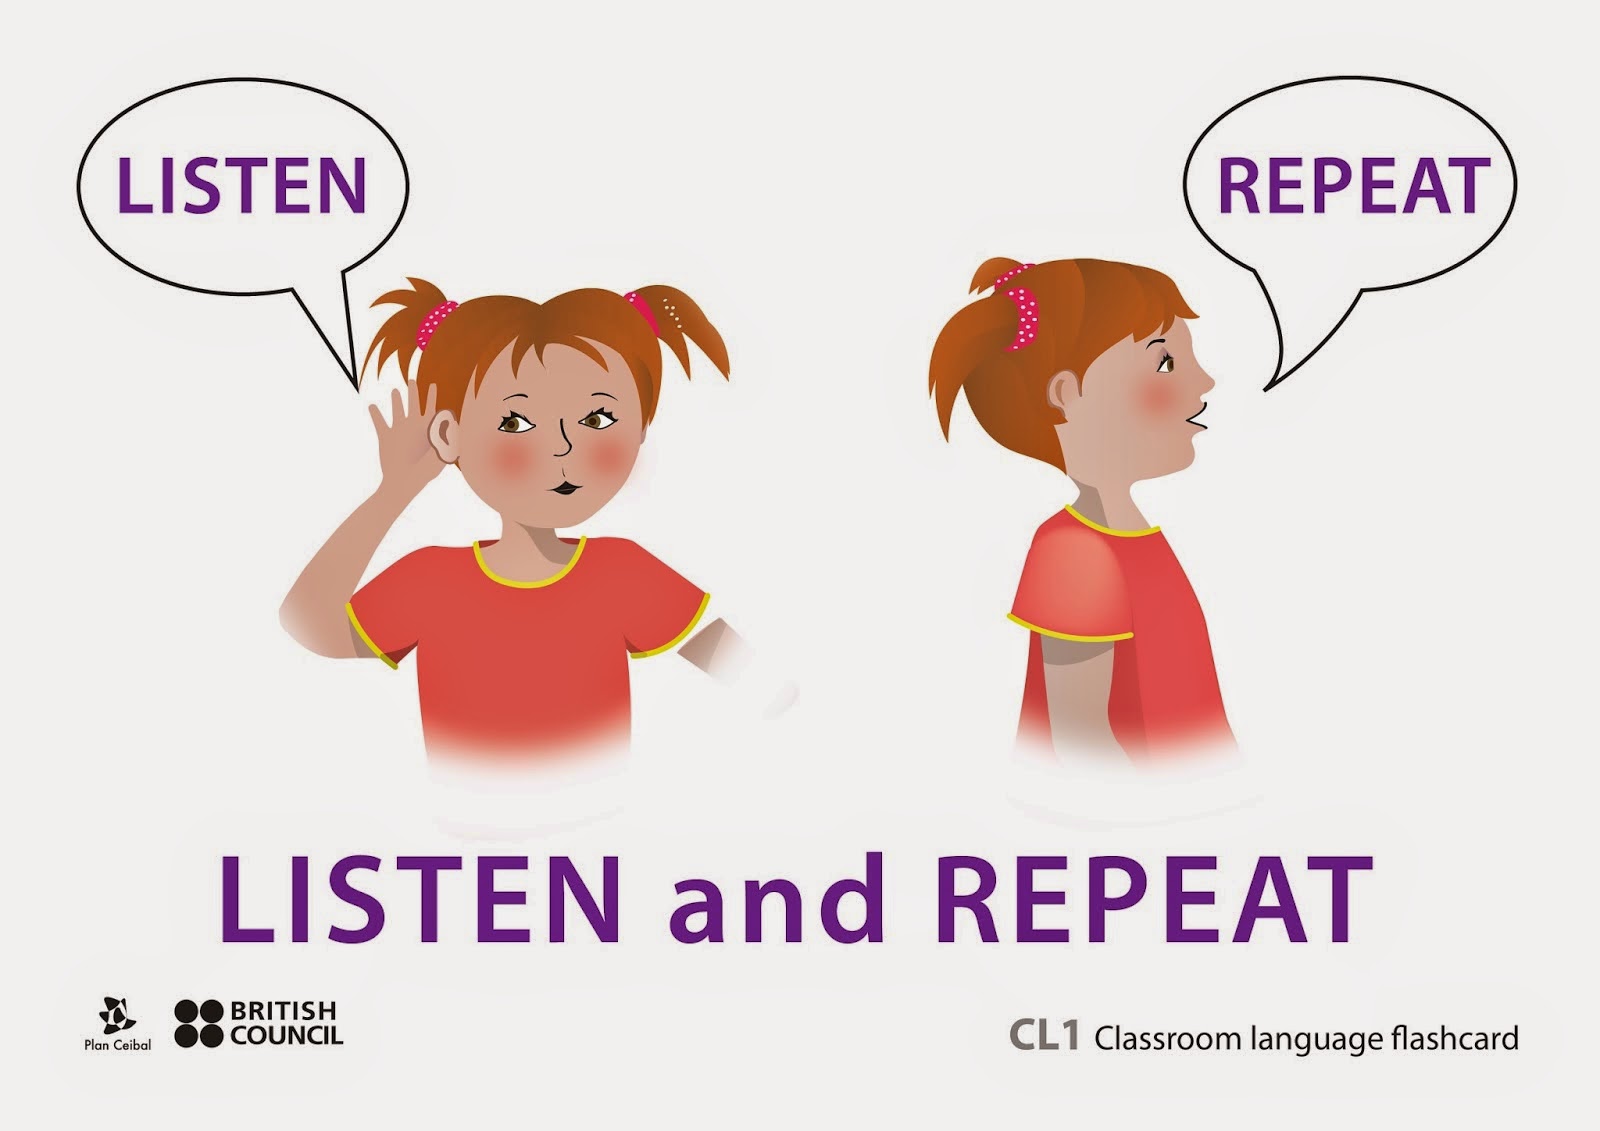 Can you speak more please. Аудирование и говорение. Listen and repeat. Listen картинка для детей. Repeat картинка.